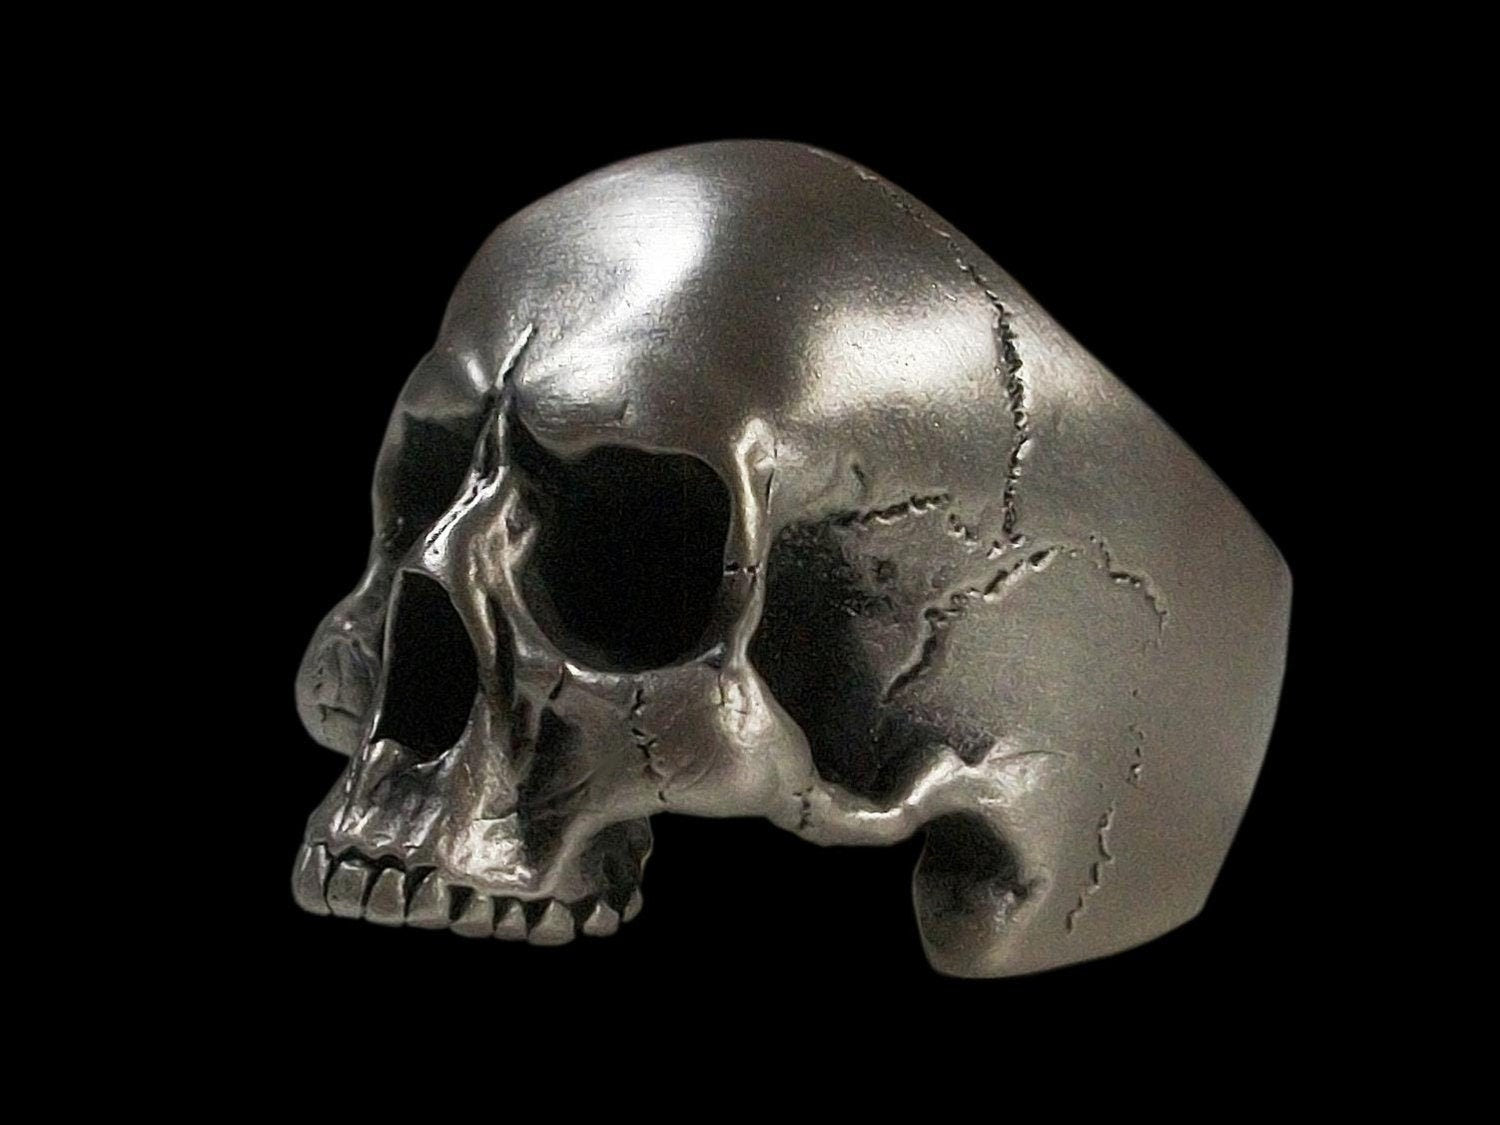 Skull Ring - Sterling Silver Anatomical Keith Richards Skull Ring